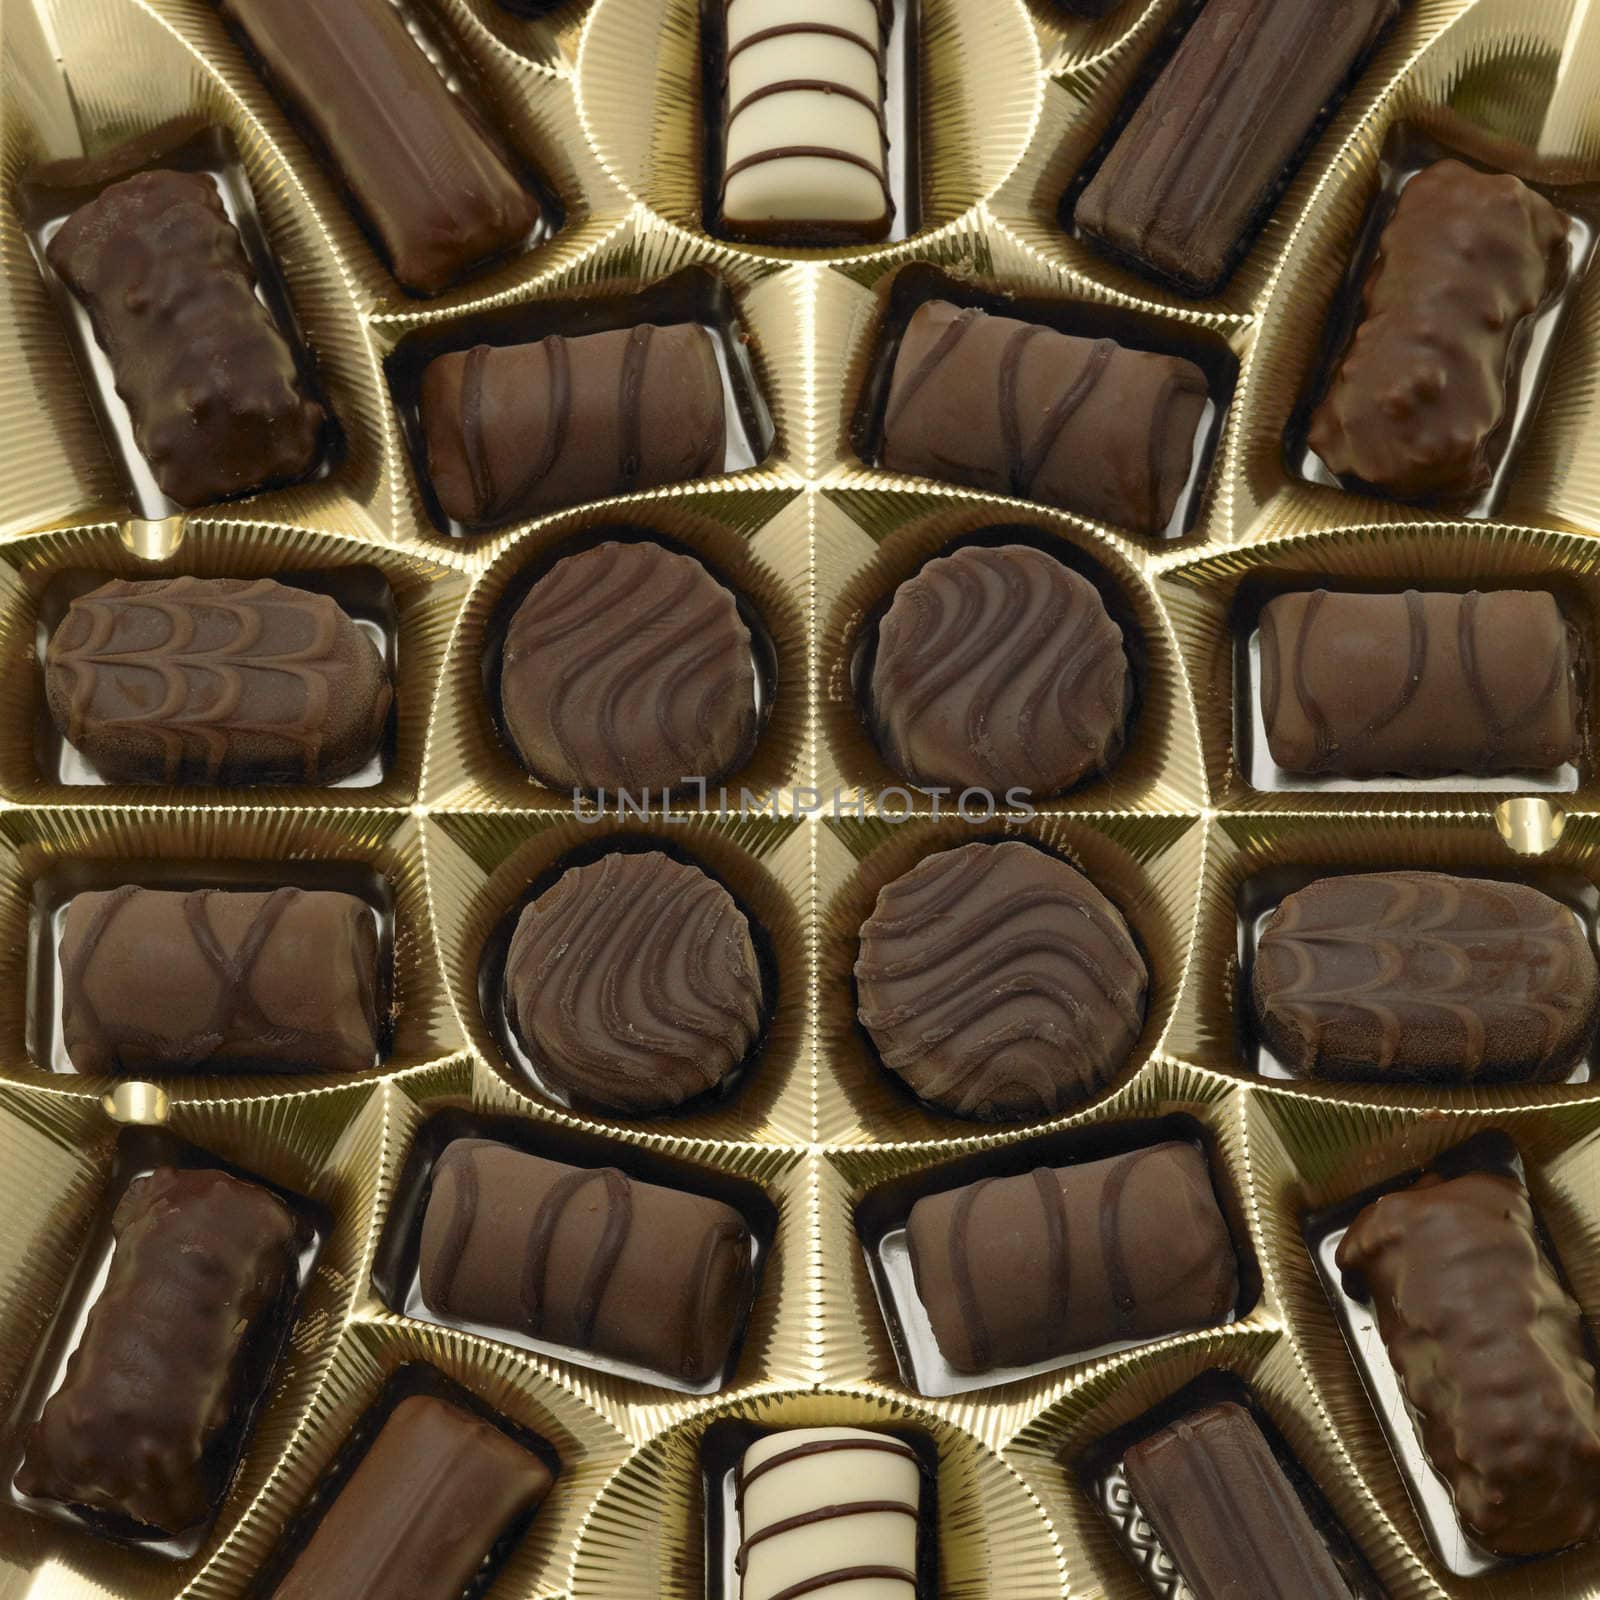 chocolate box by phbcz